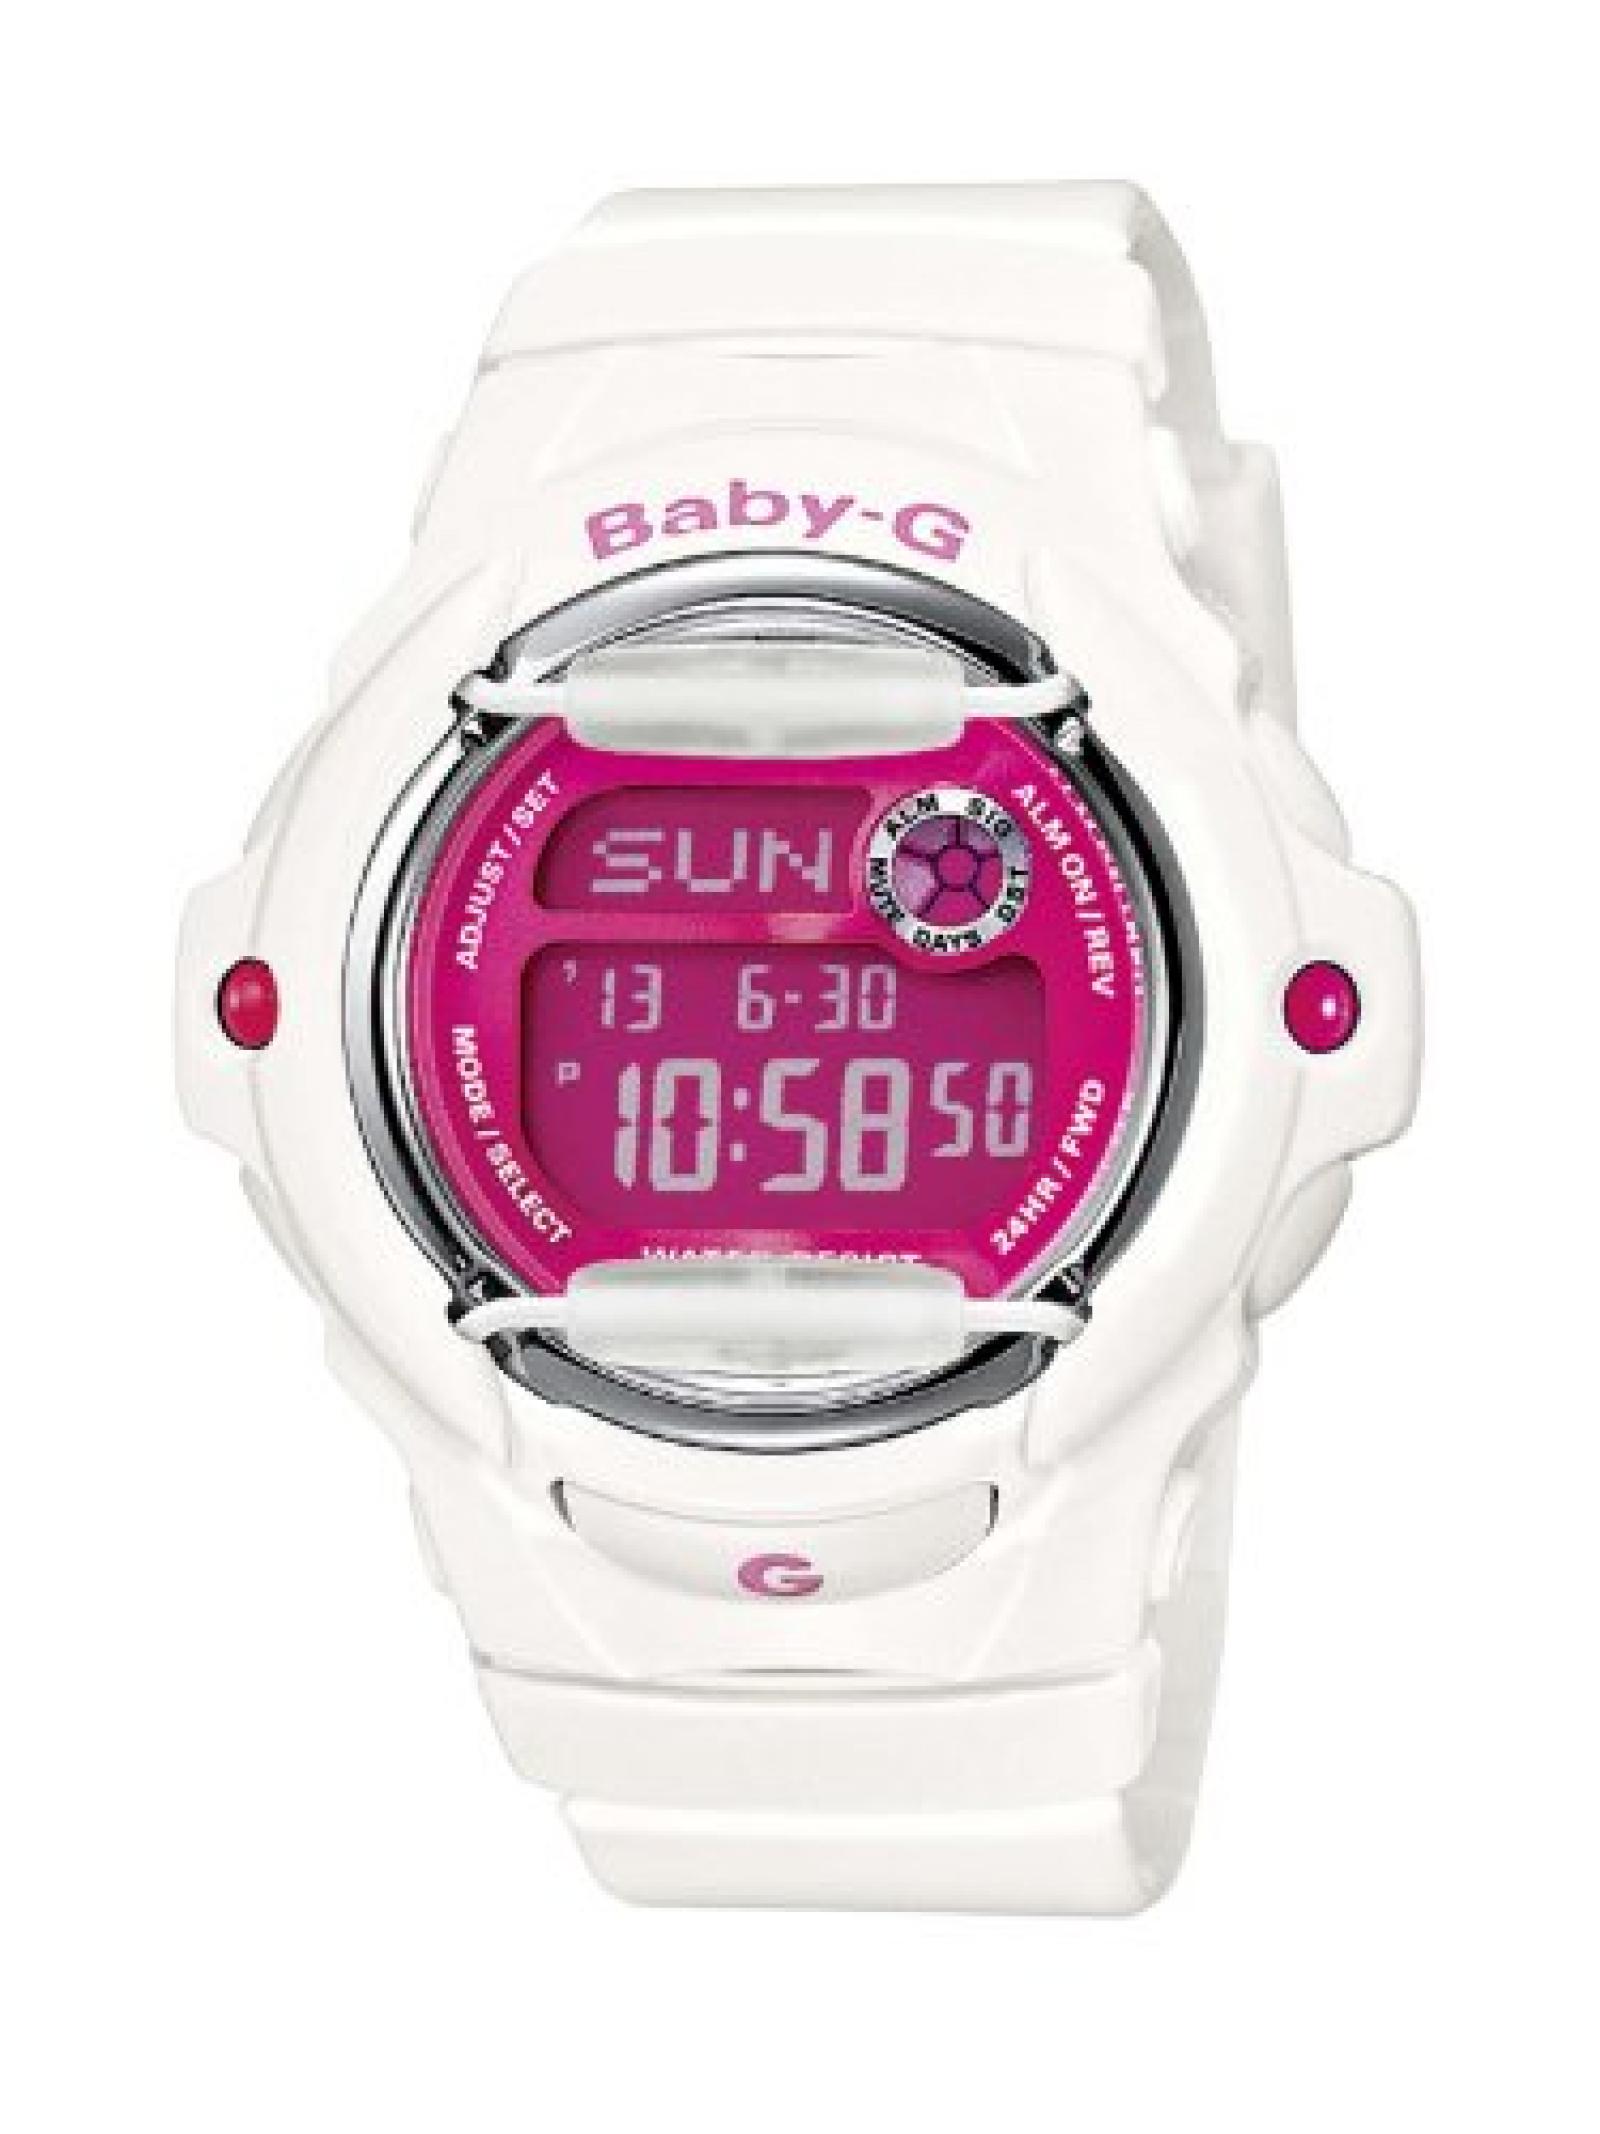 Casio Baby-G Damen-Armbanduhr weiß Digital Quarz BG-169R-7DER 